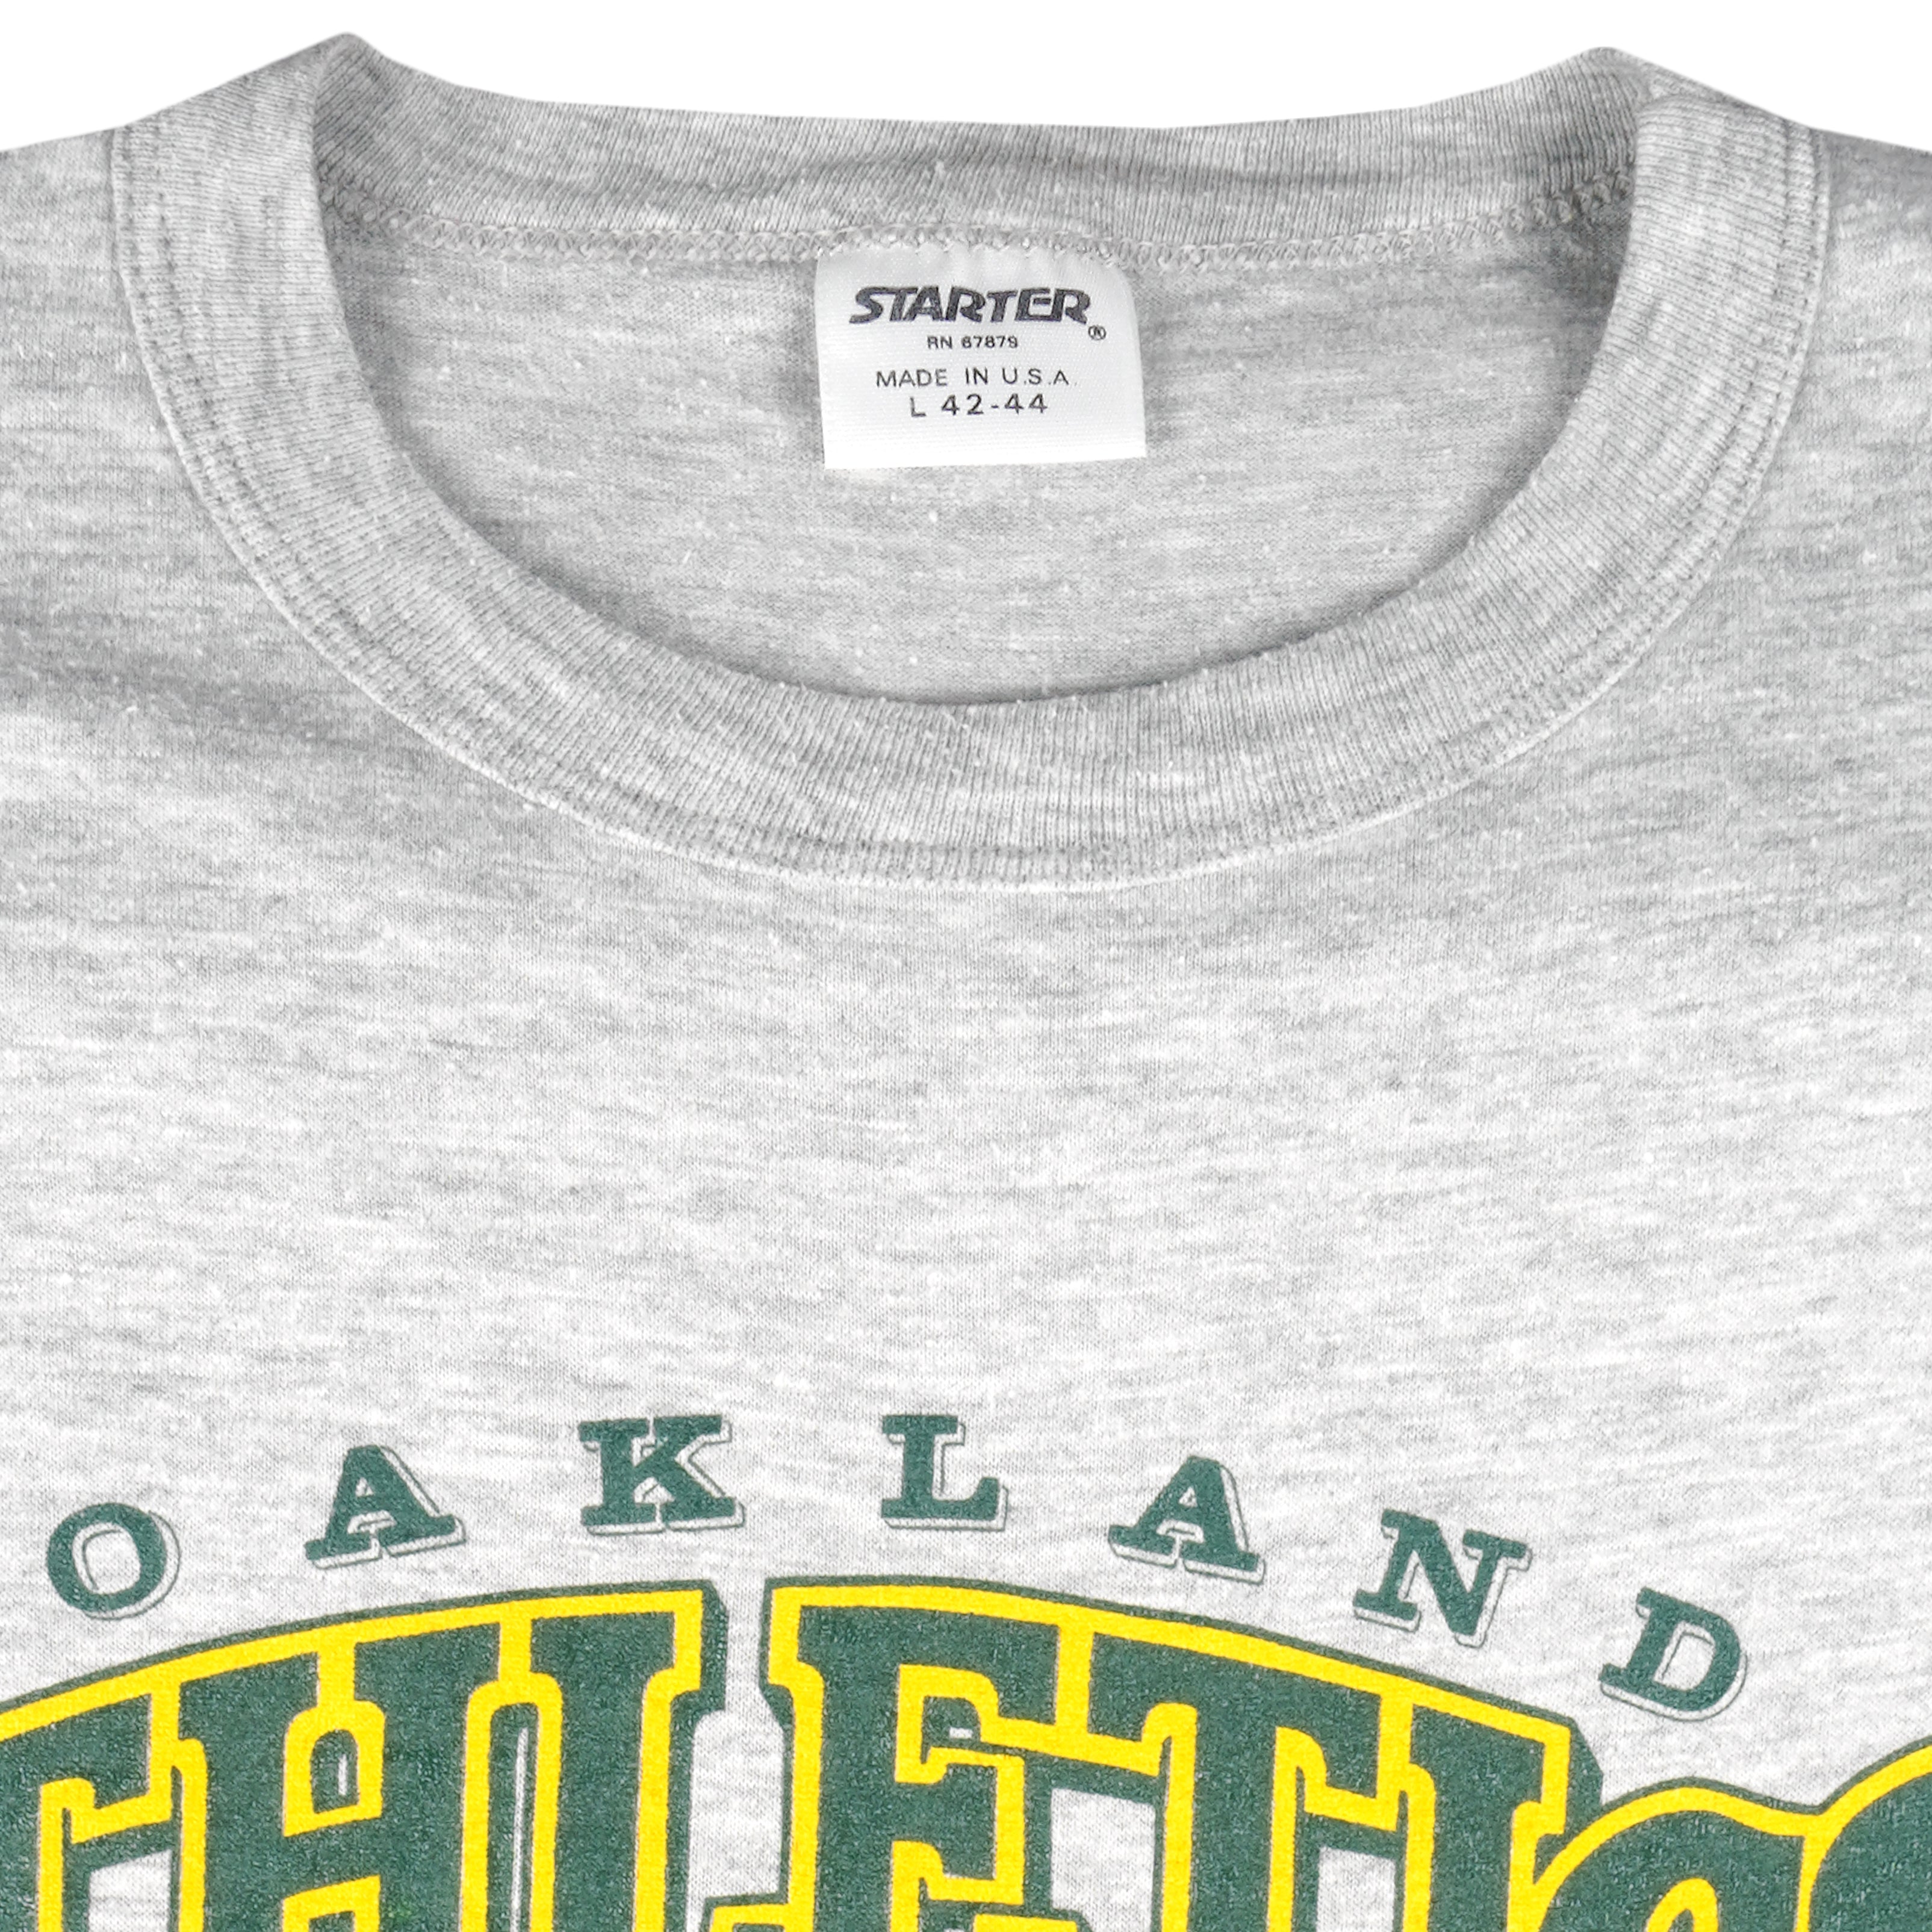 Vintage Oakland Athletics 1988 American League Champions T 